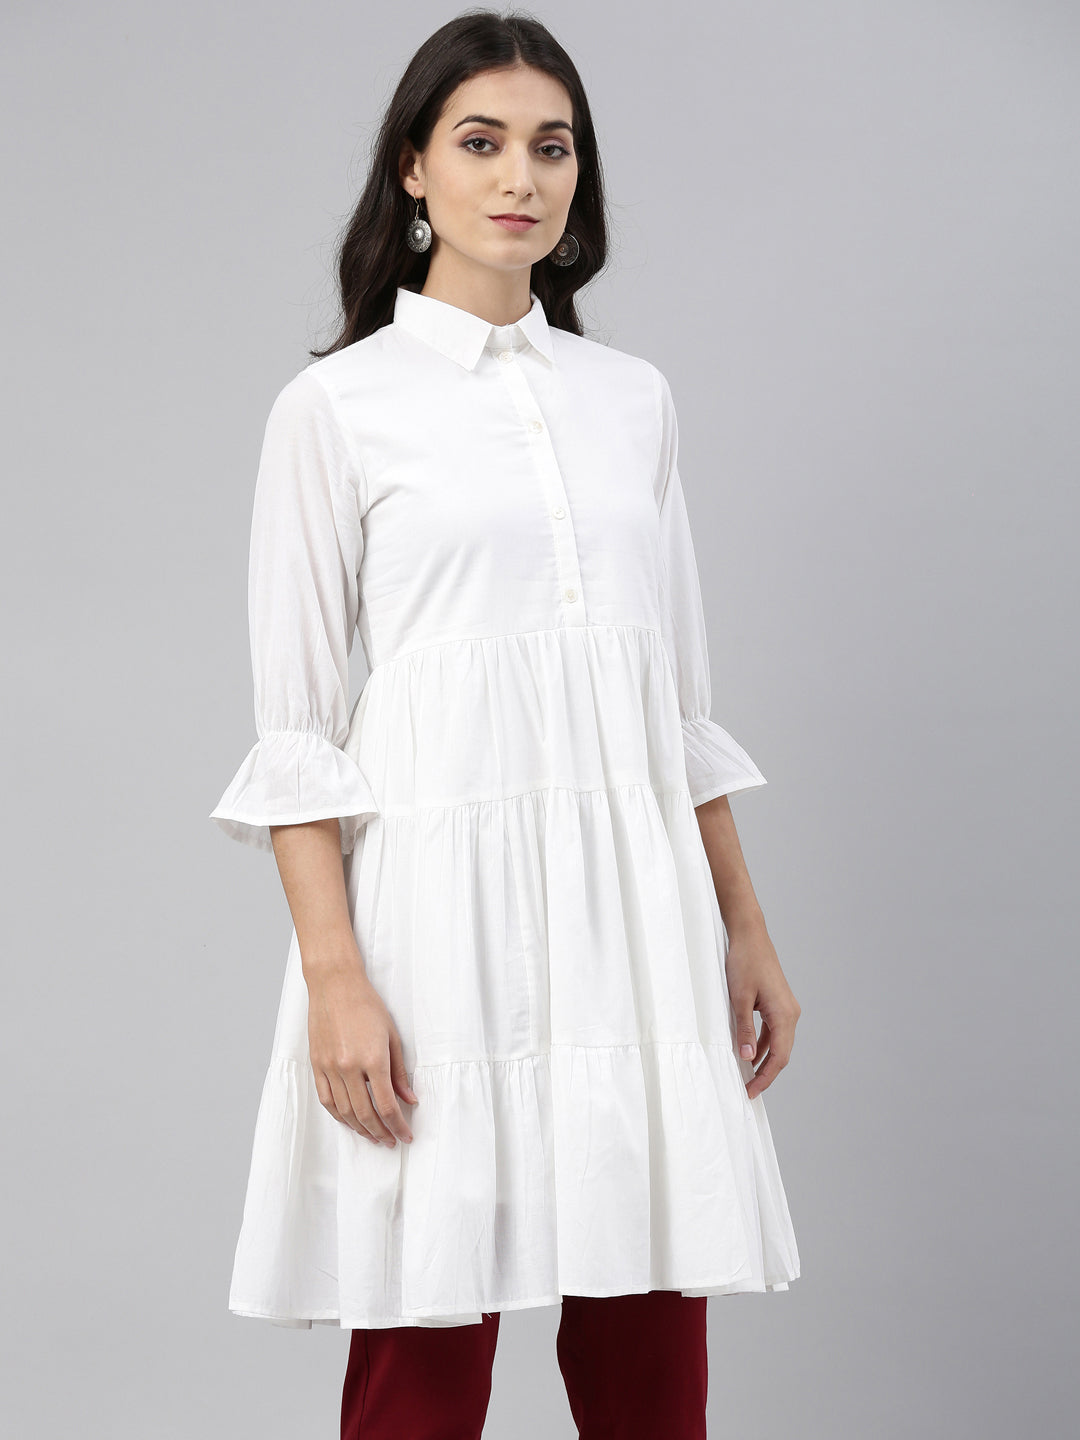 Neeru's White Color Cotton Fabric Tunic Koti